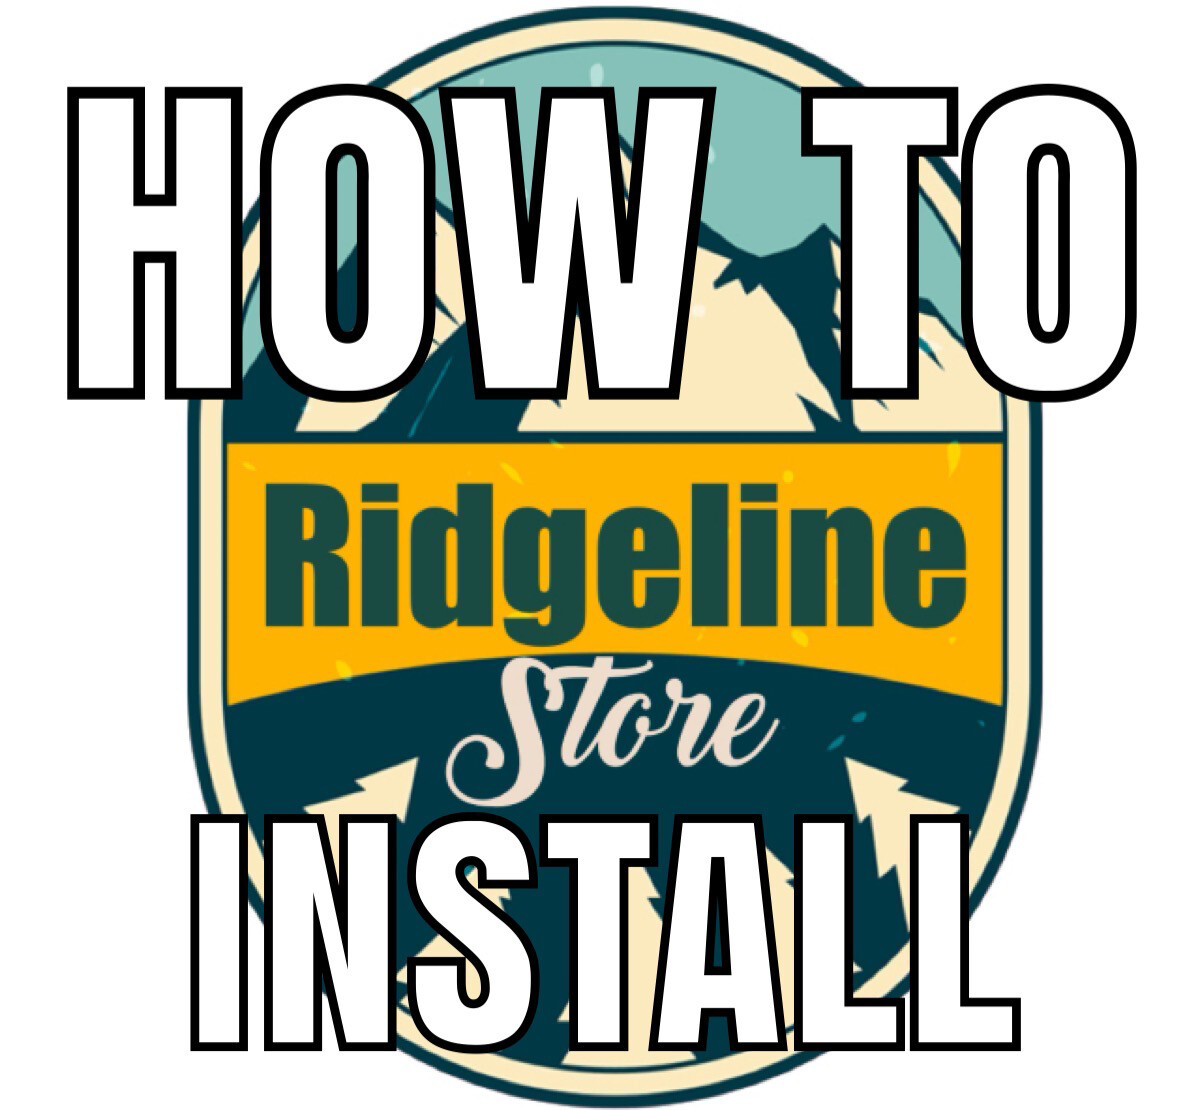 How To Install The Honda Ridgeline Tailgate Lock Kit